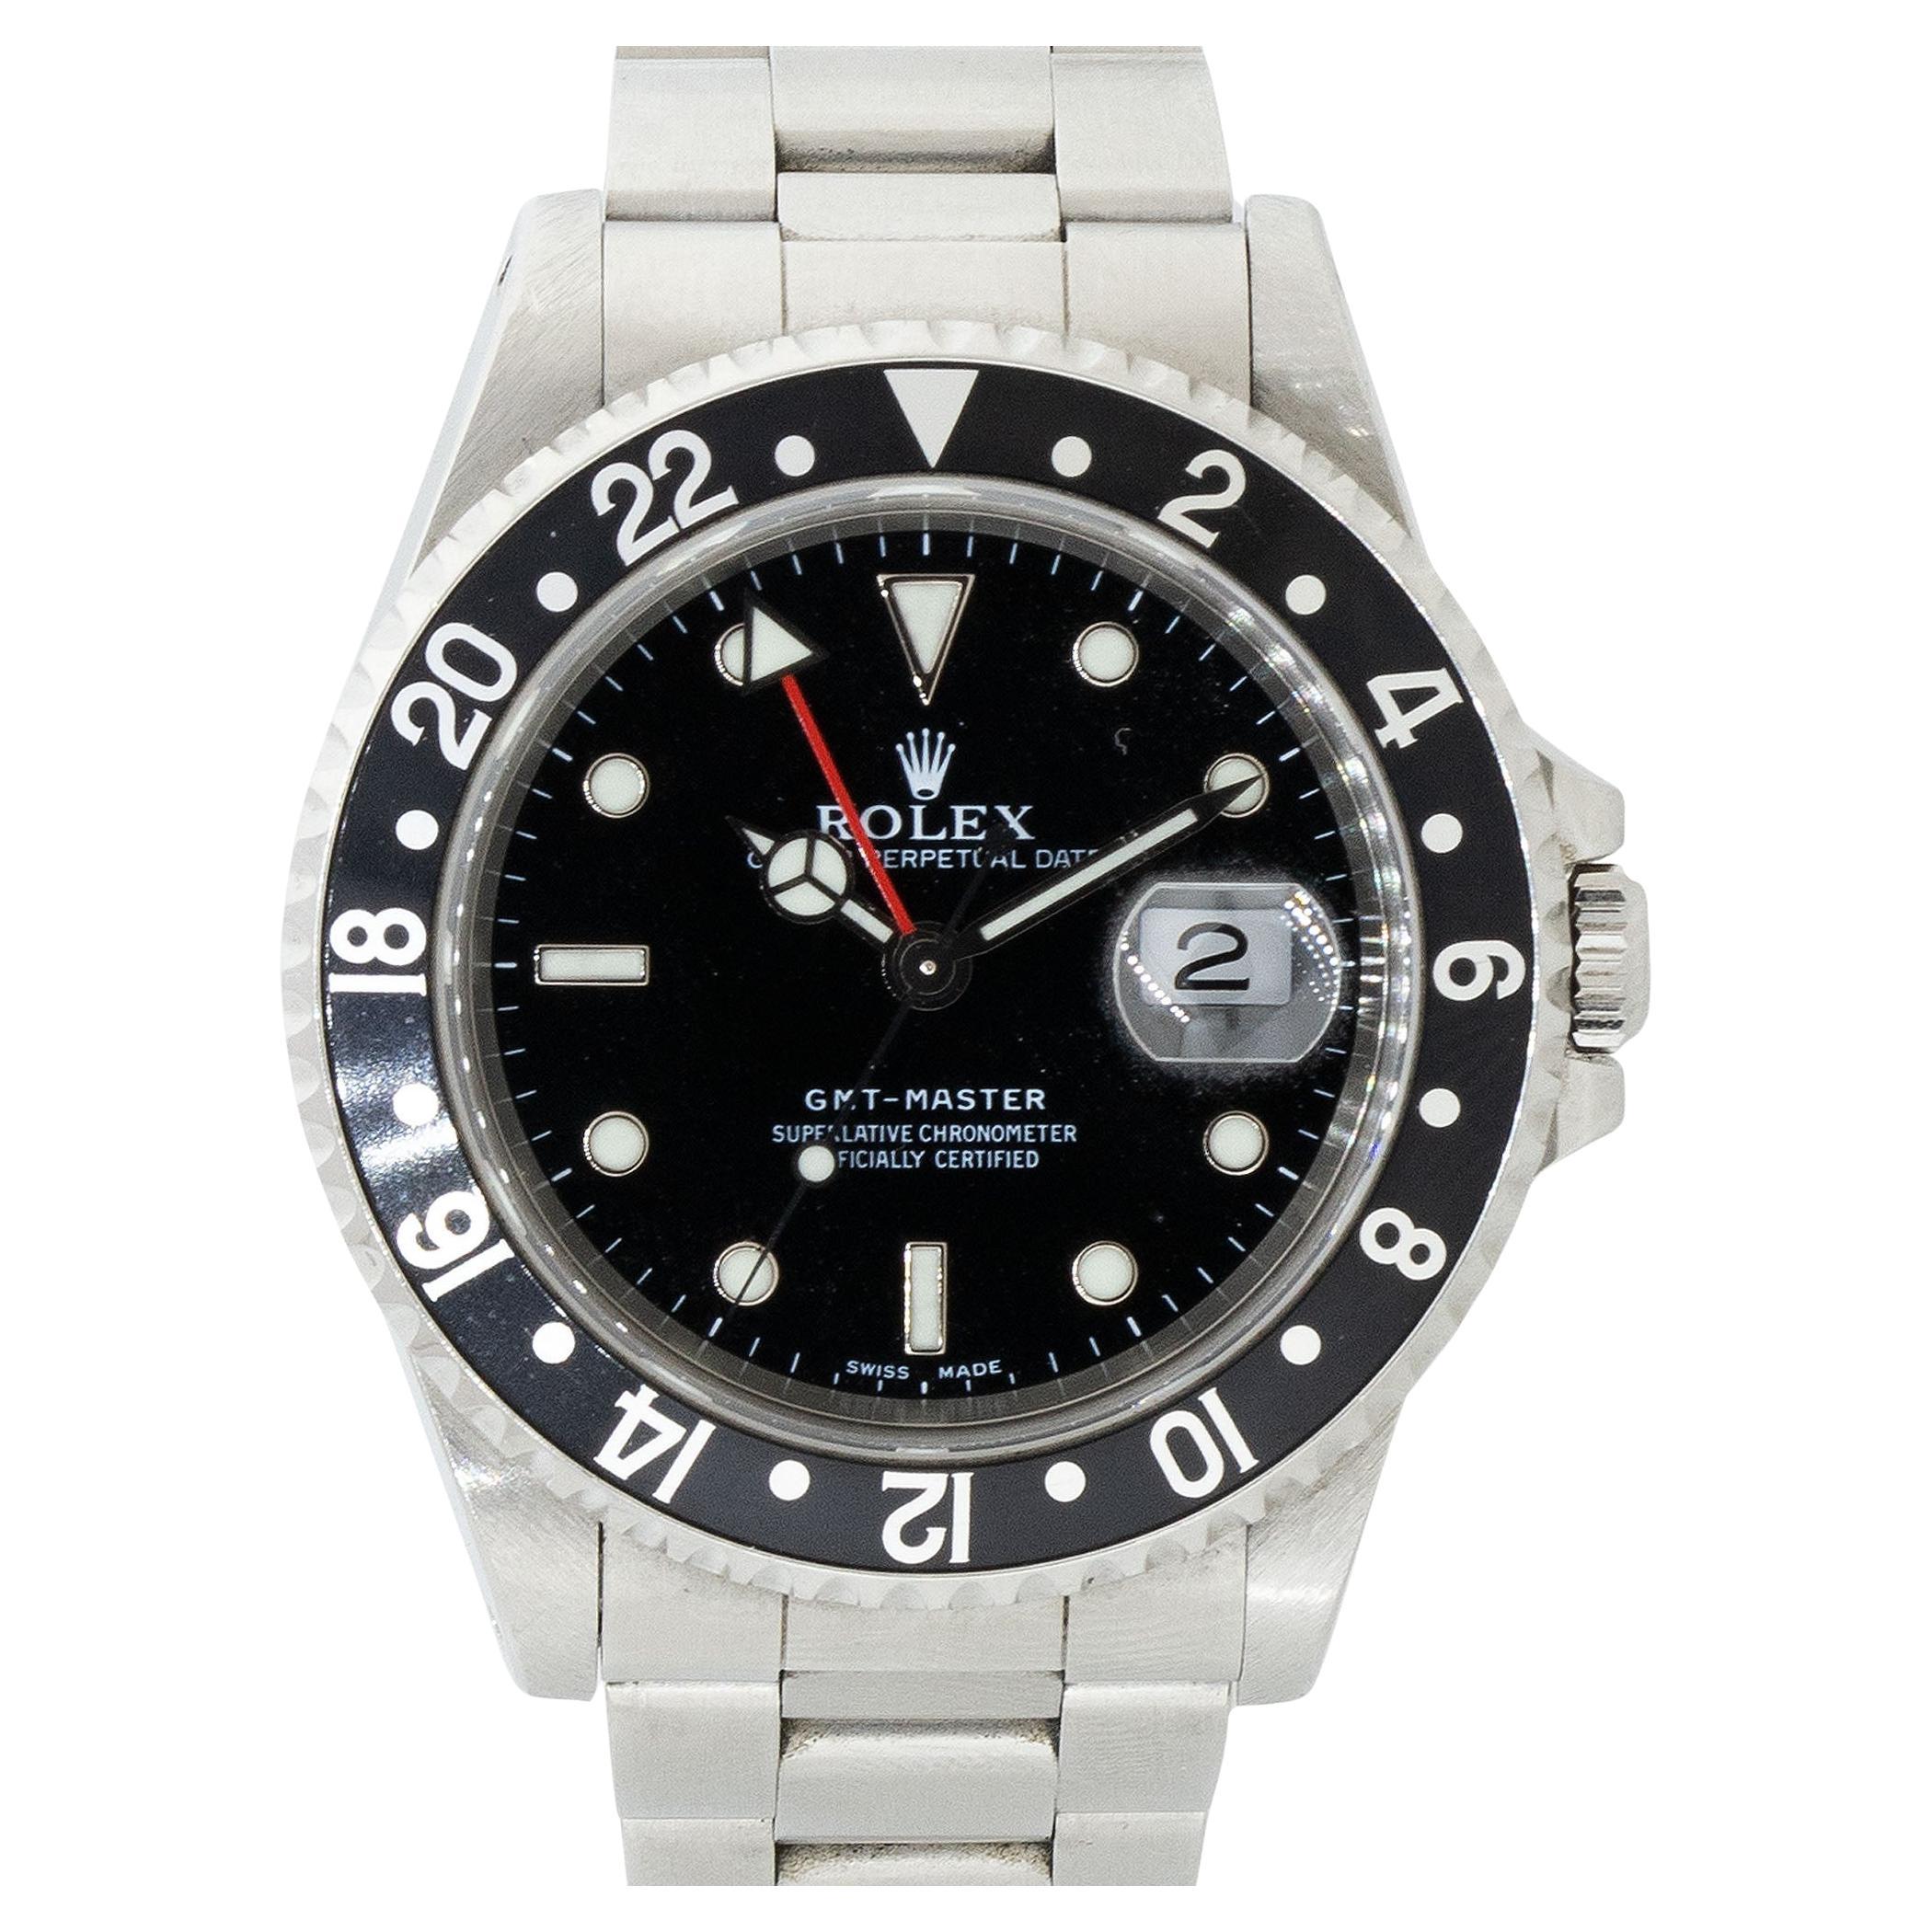 Montre Rolex 16700 GMT-Master en acier inoxydable avec cadran noir